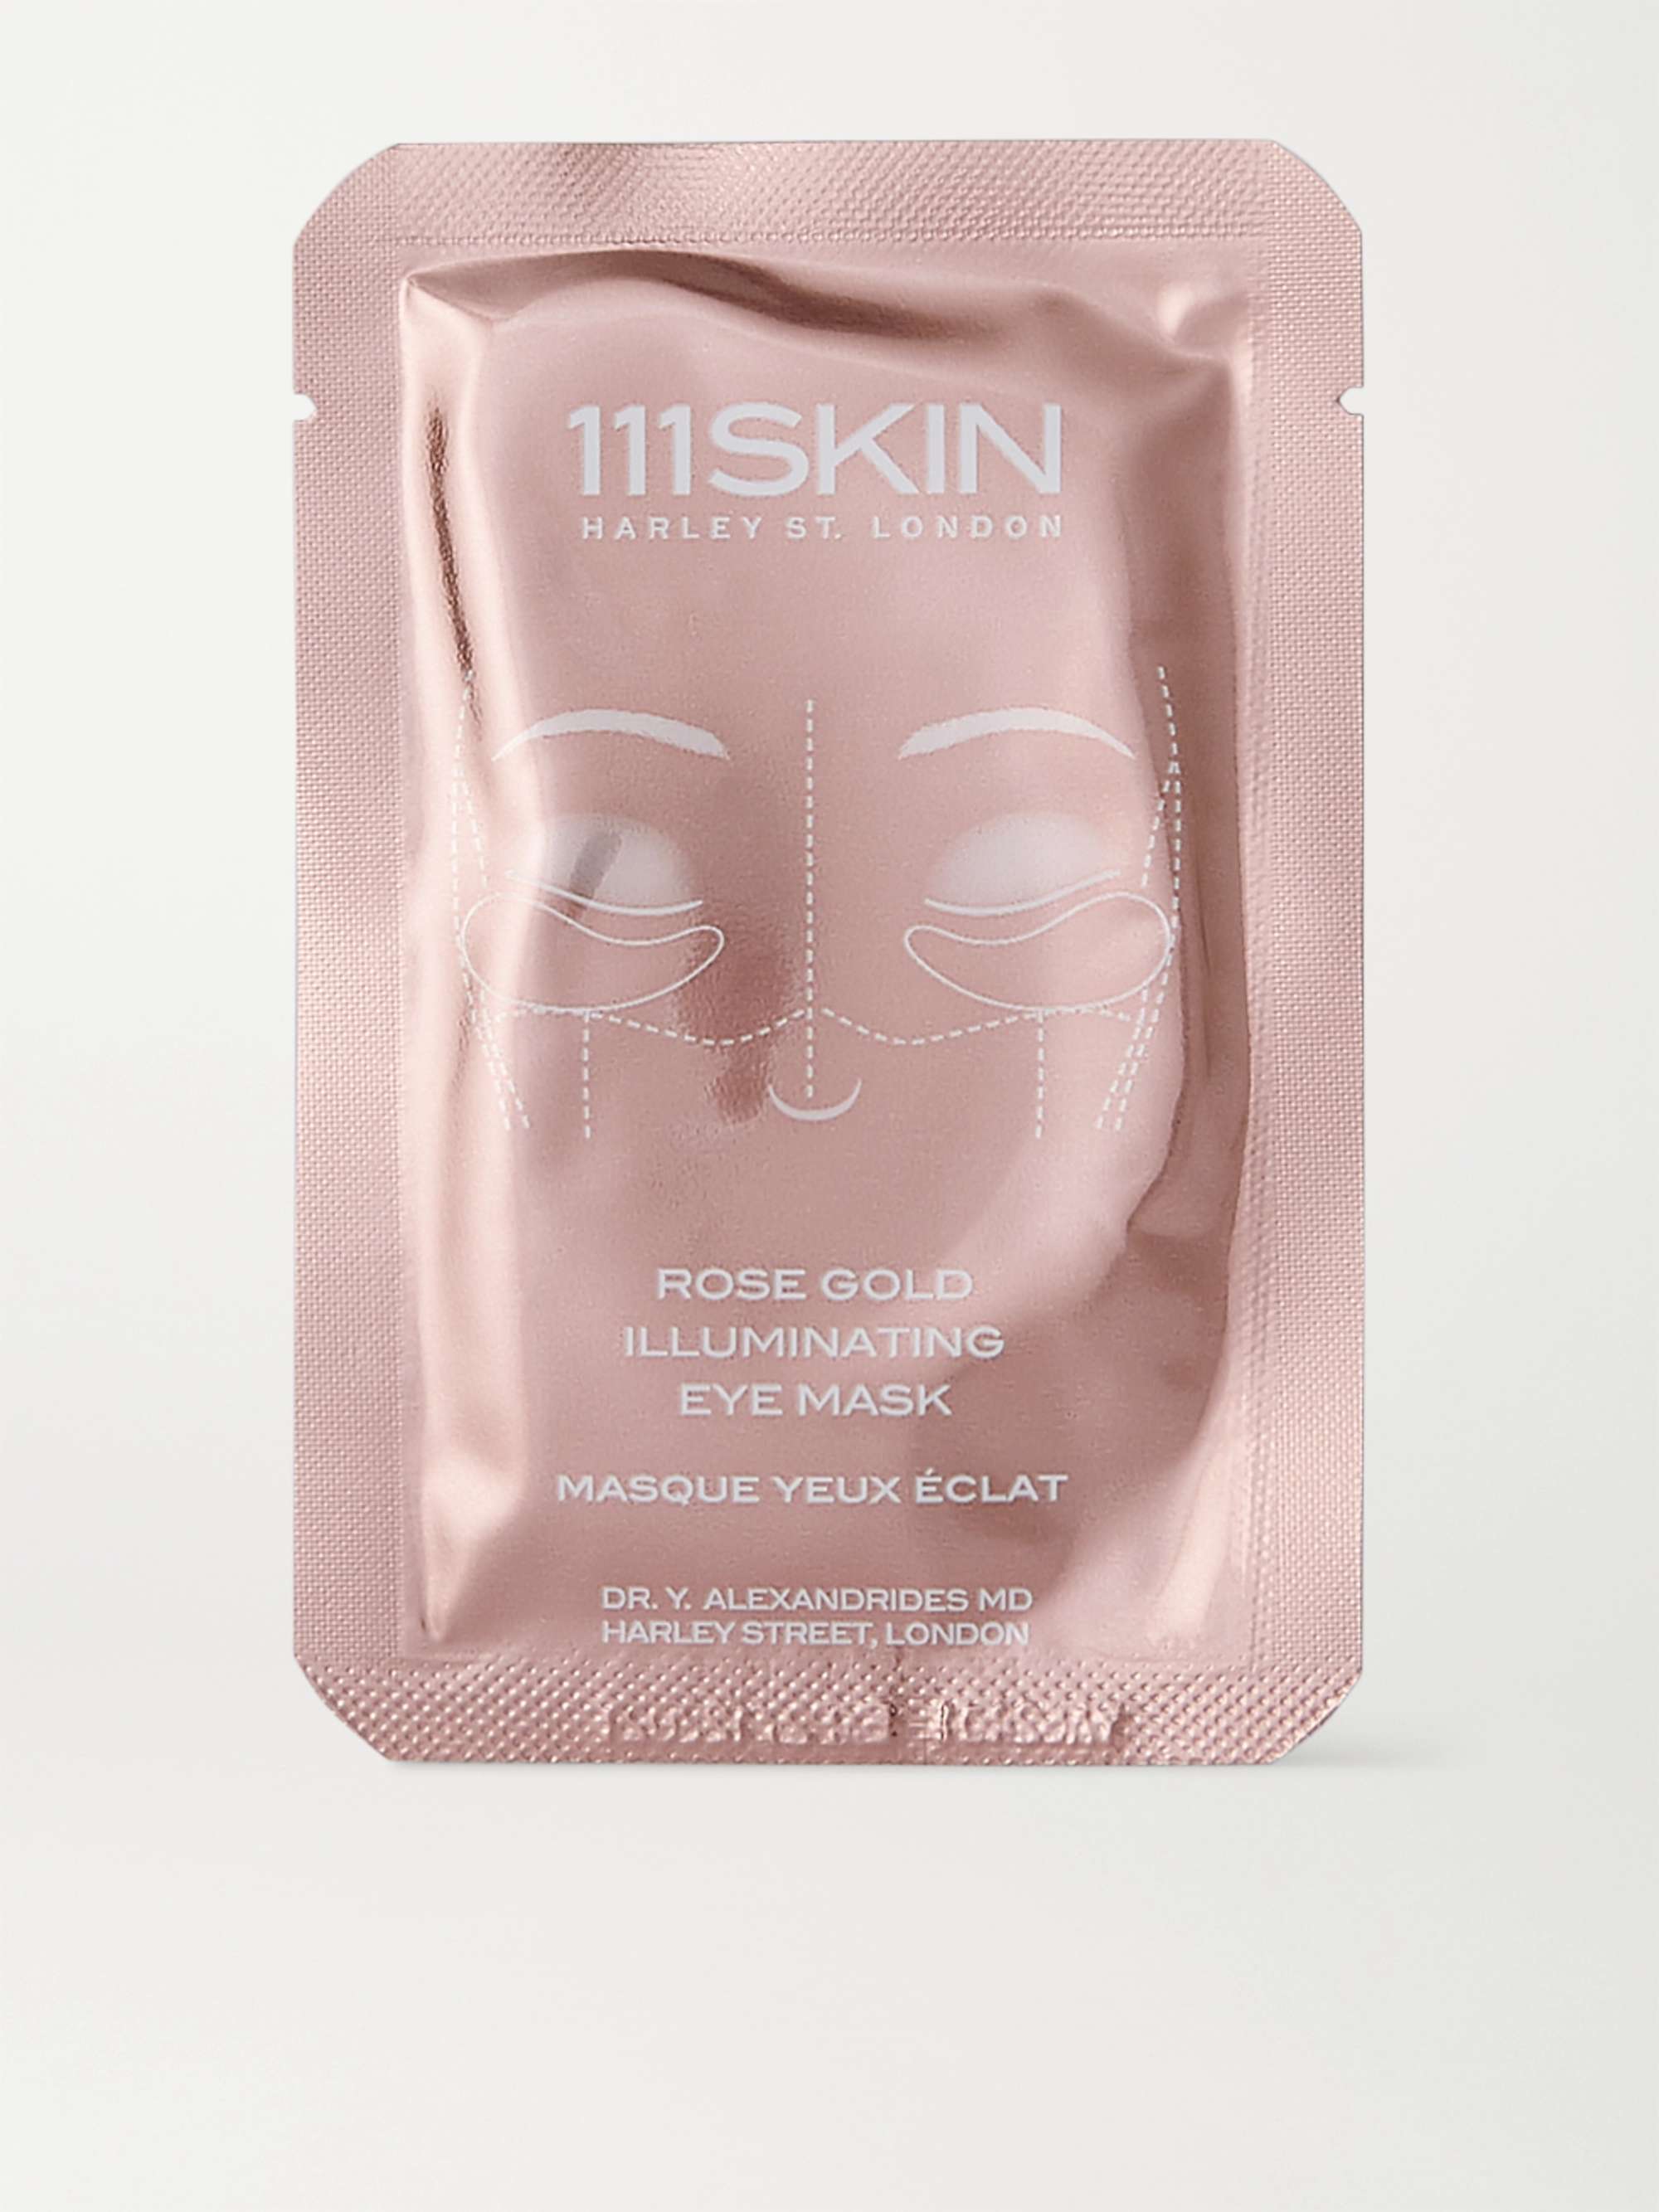 111SKIN Rose Gold Illuminating Eye Mask, 8 x 6ml